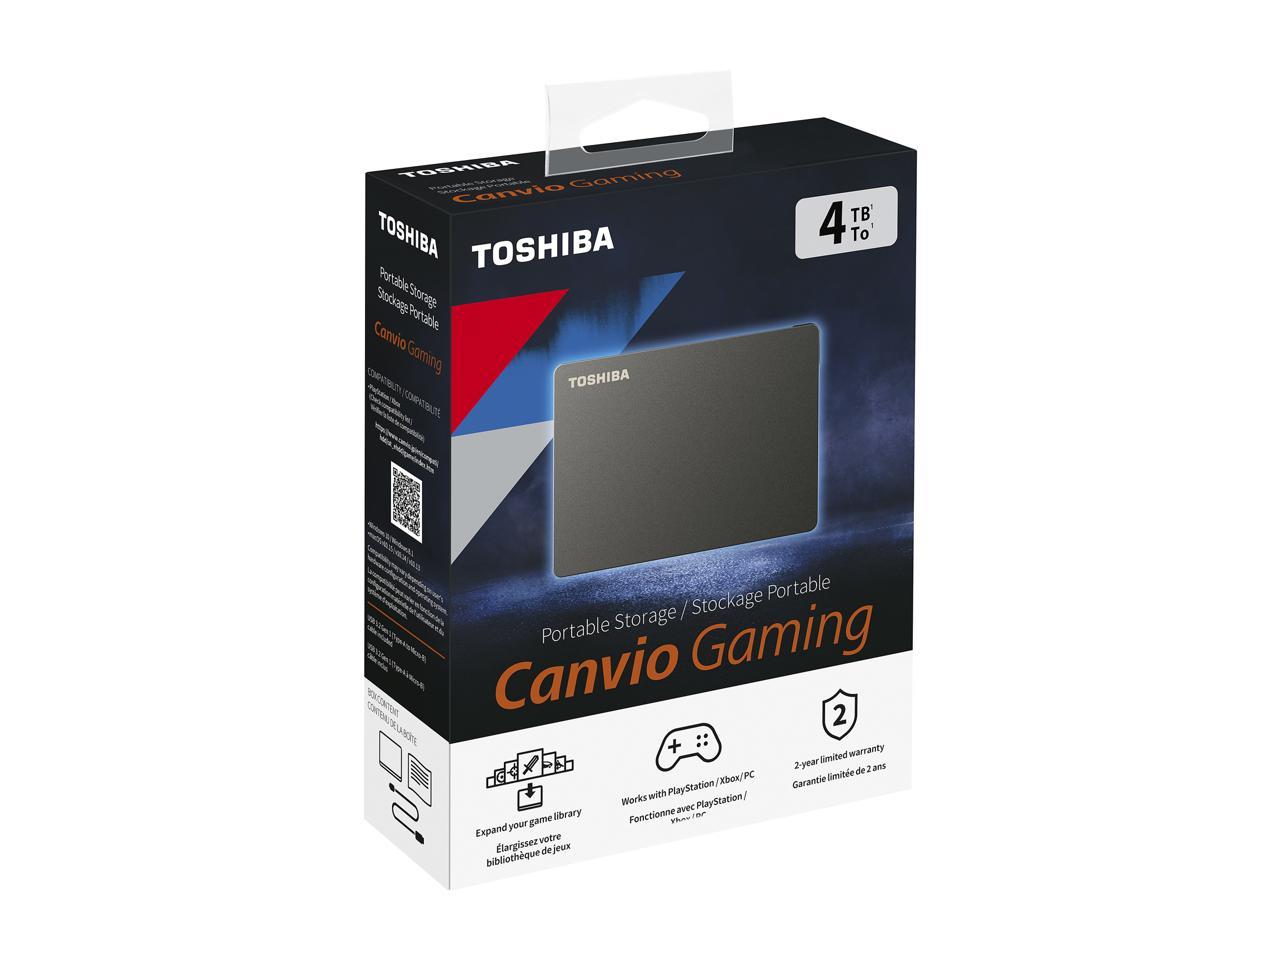 TOSHIBA TB Canvio Gaming Portable External Hard Drive USB Model HDTX XK CA Black Newegg Ca